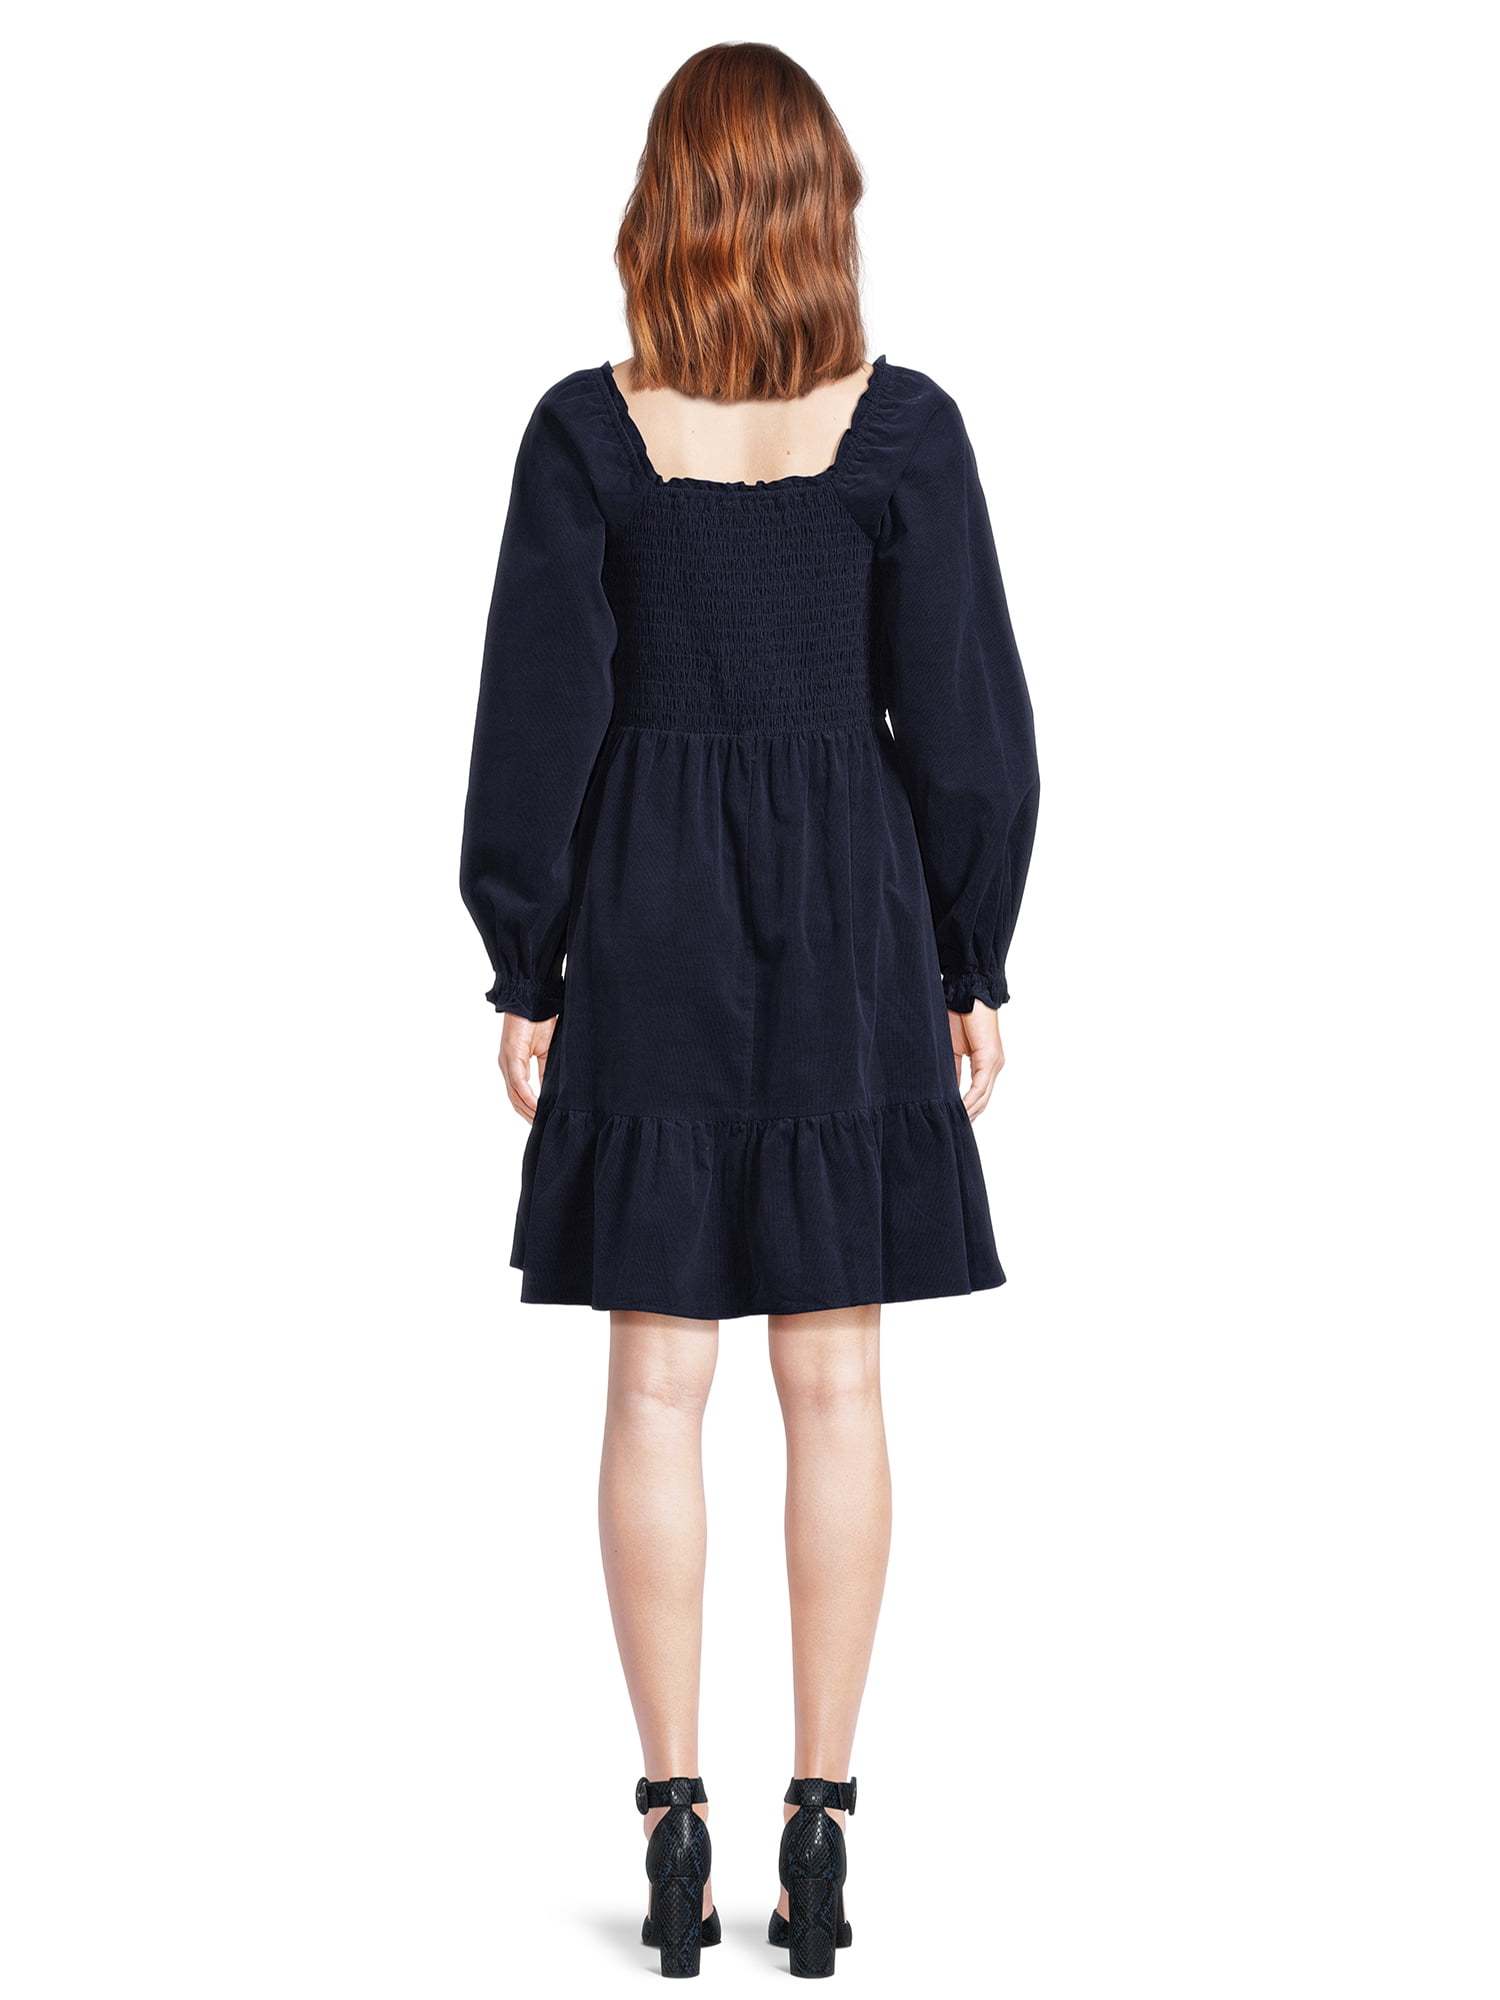 Ladies - Black Smocked-Bodice Dress - Size: XL - H&M